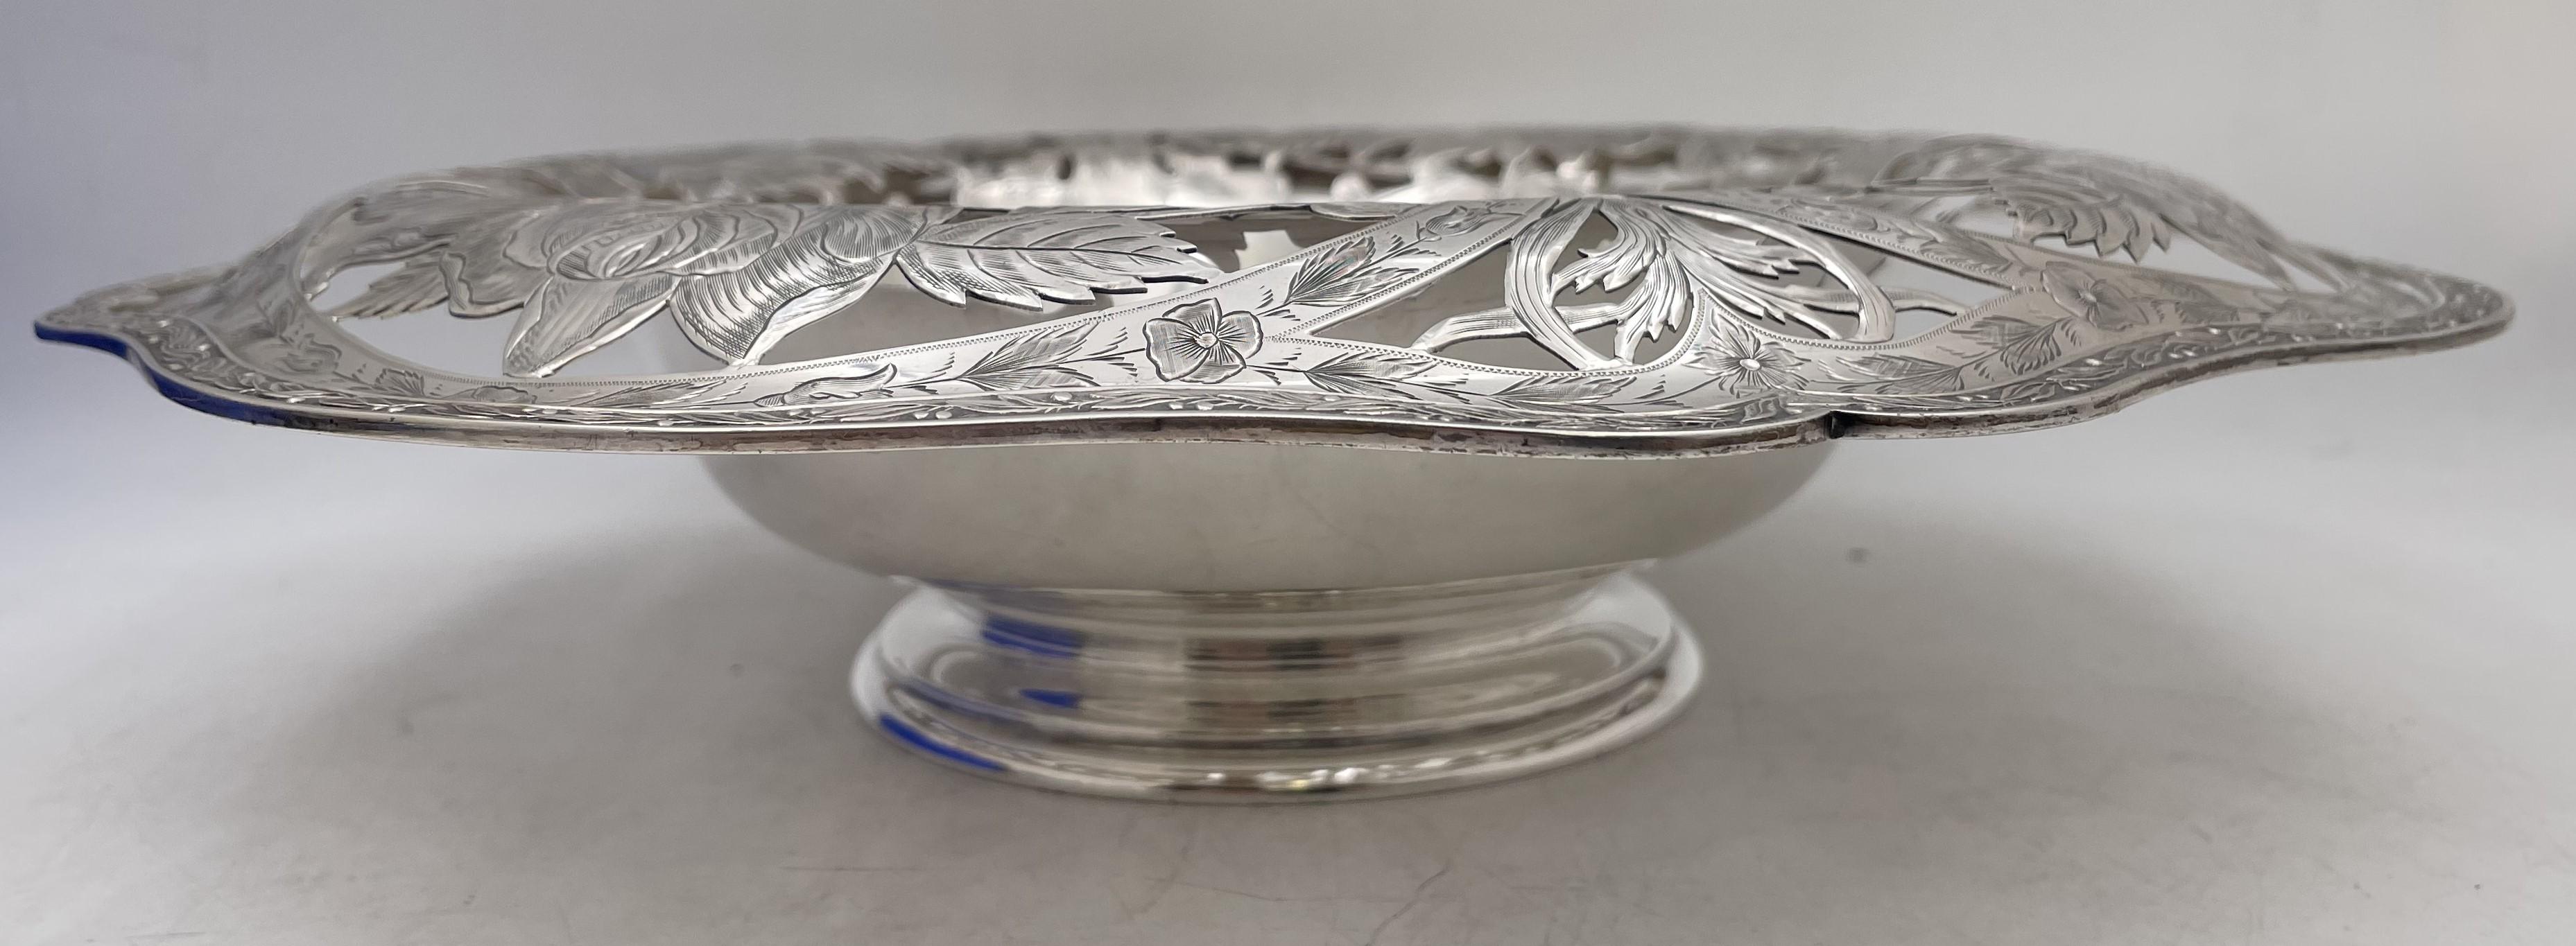 Ludwig, Redlich & Co. Sterling Silver 1890s Centerpiece Bowl Art Nouveau Style For Sale 1